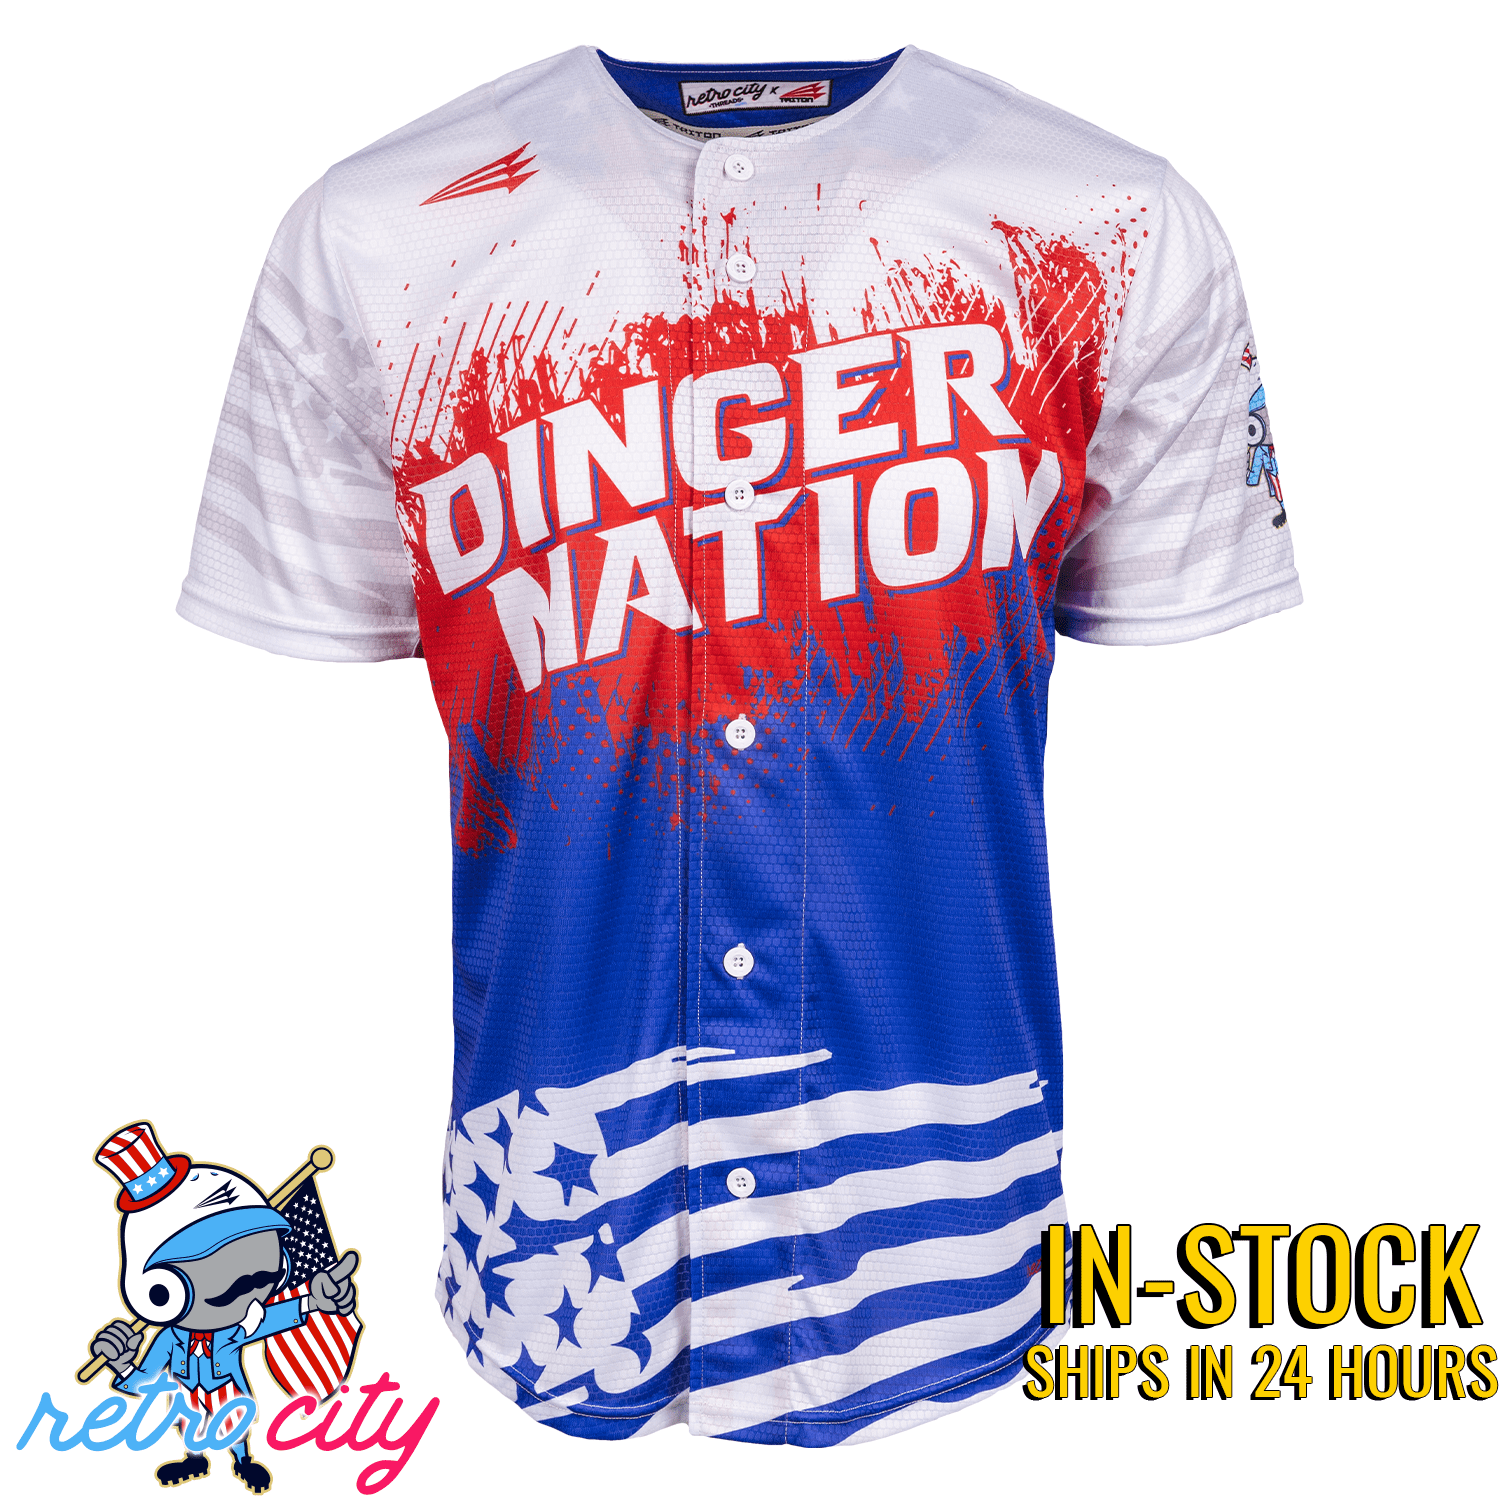 Dinger Nation Team Triton Baseball Jersey Seamhead Collection Shirt